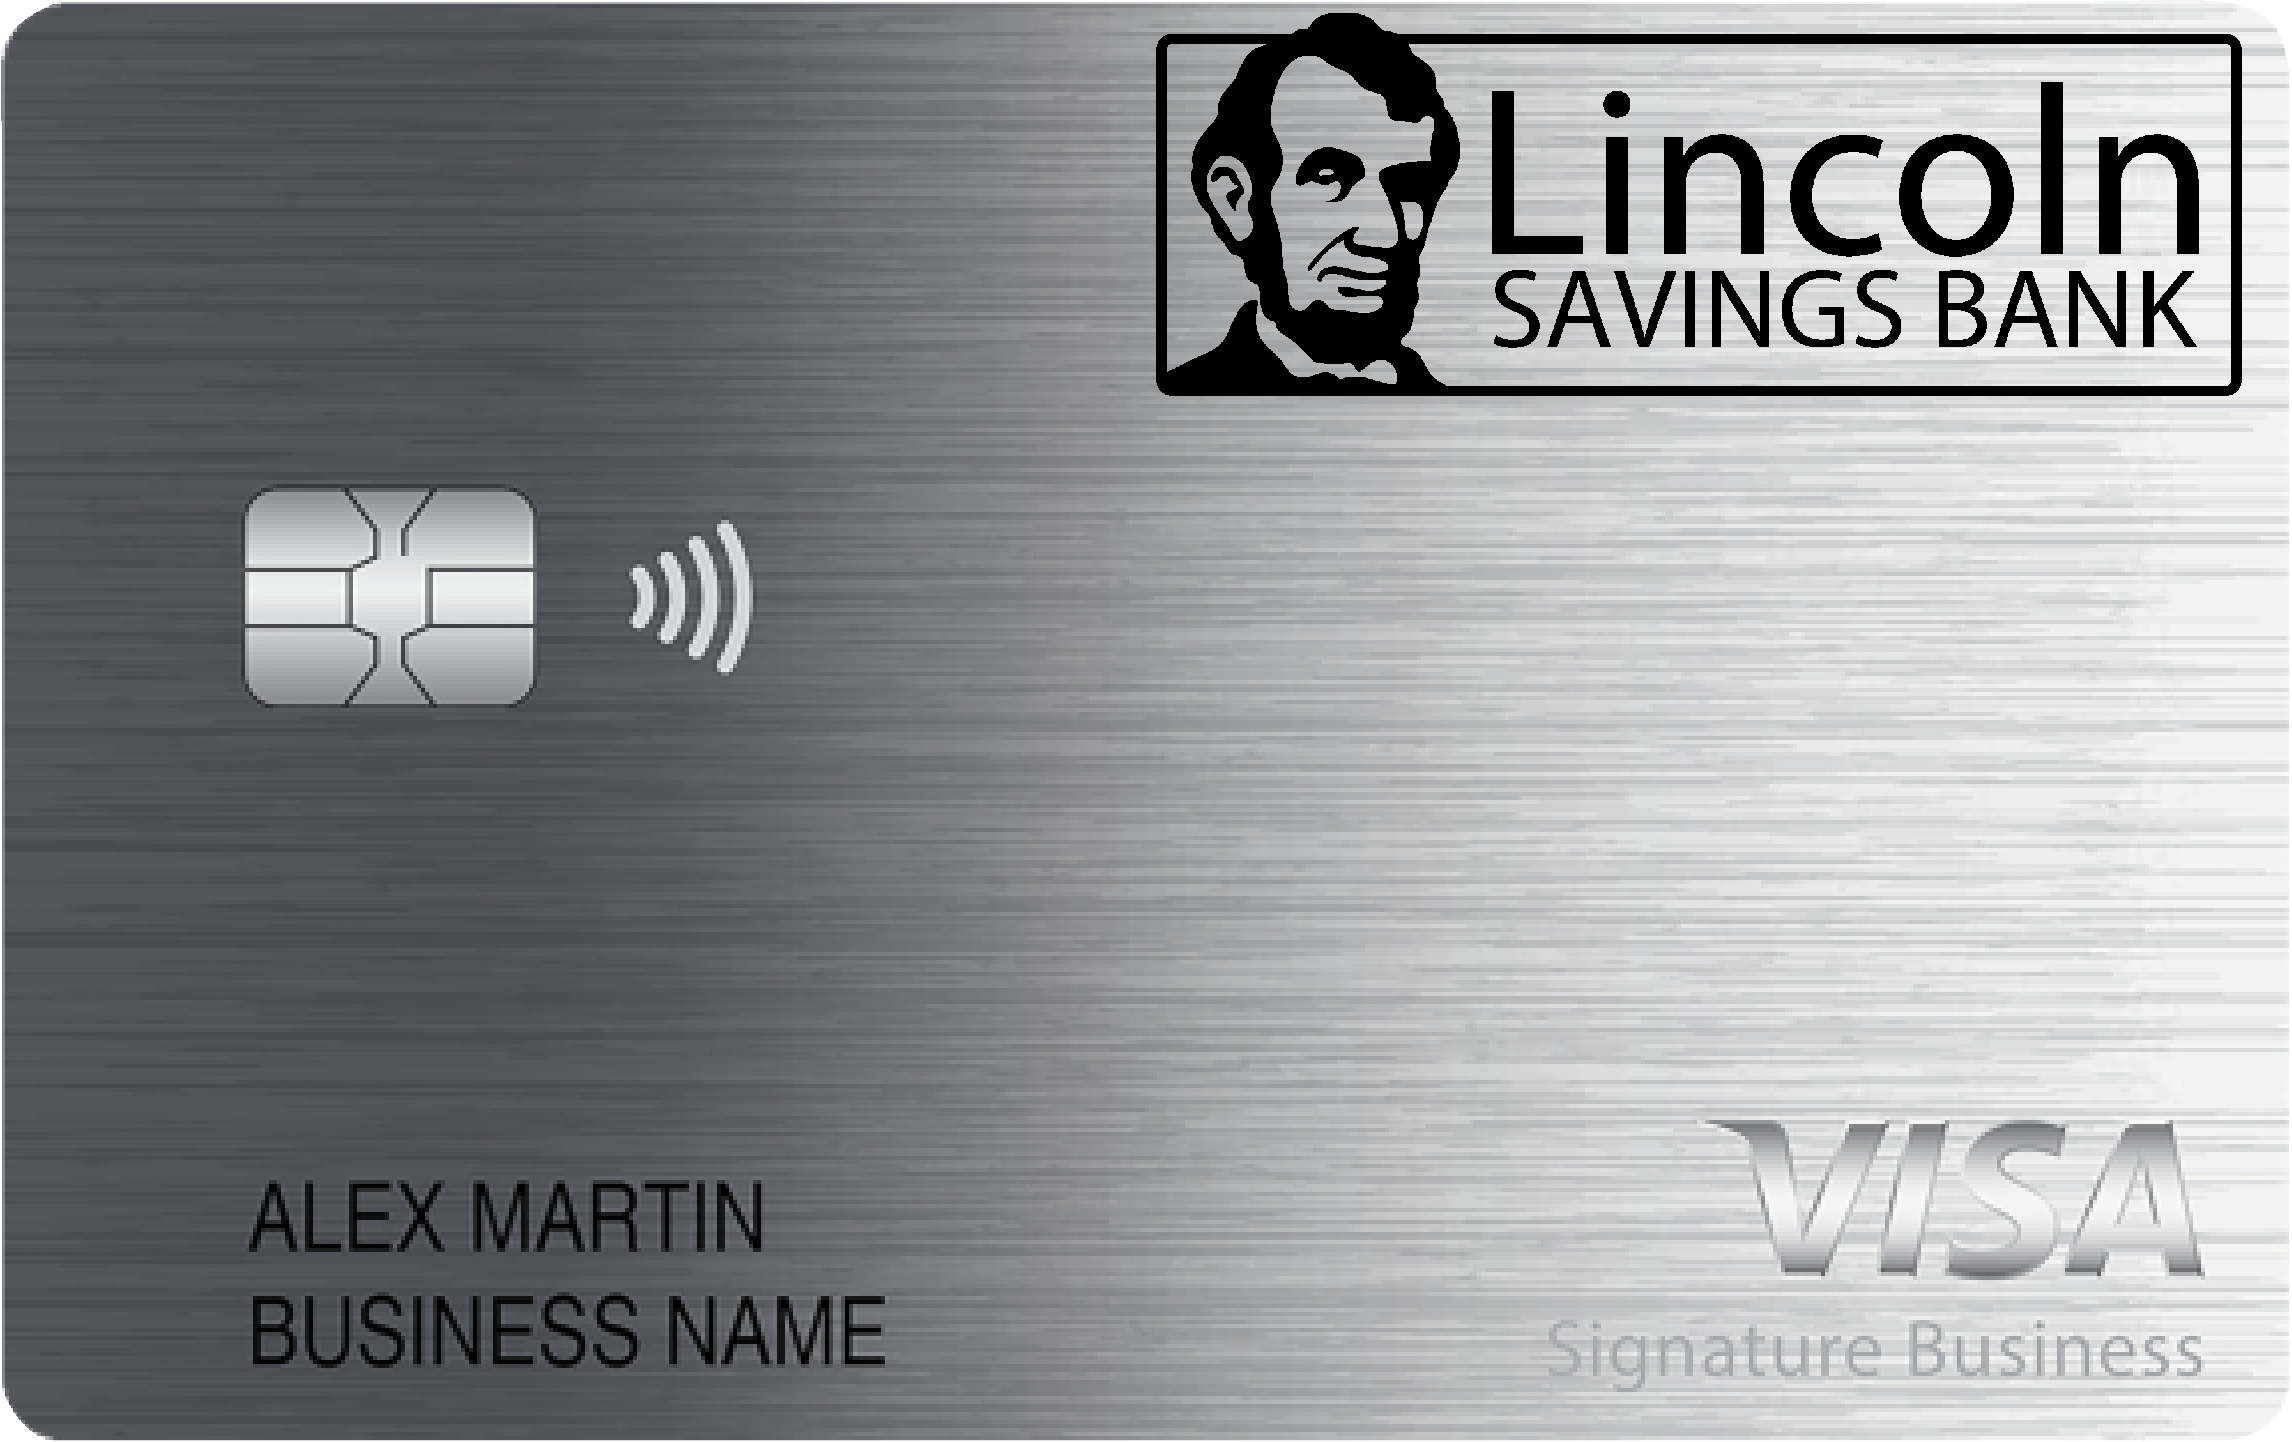 Lincoln Savings Bank Smart Business Rewards Card